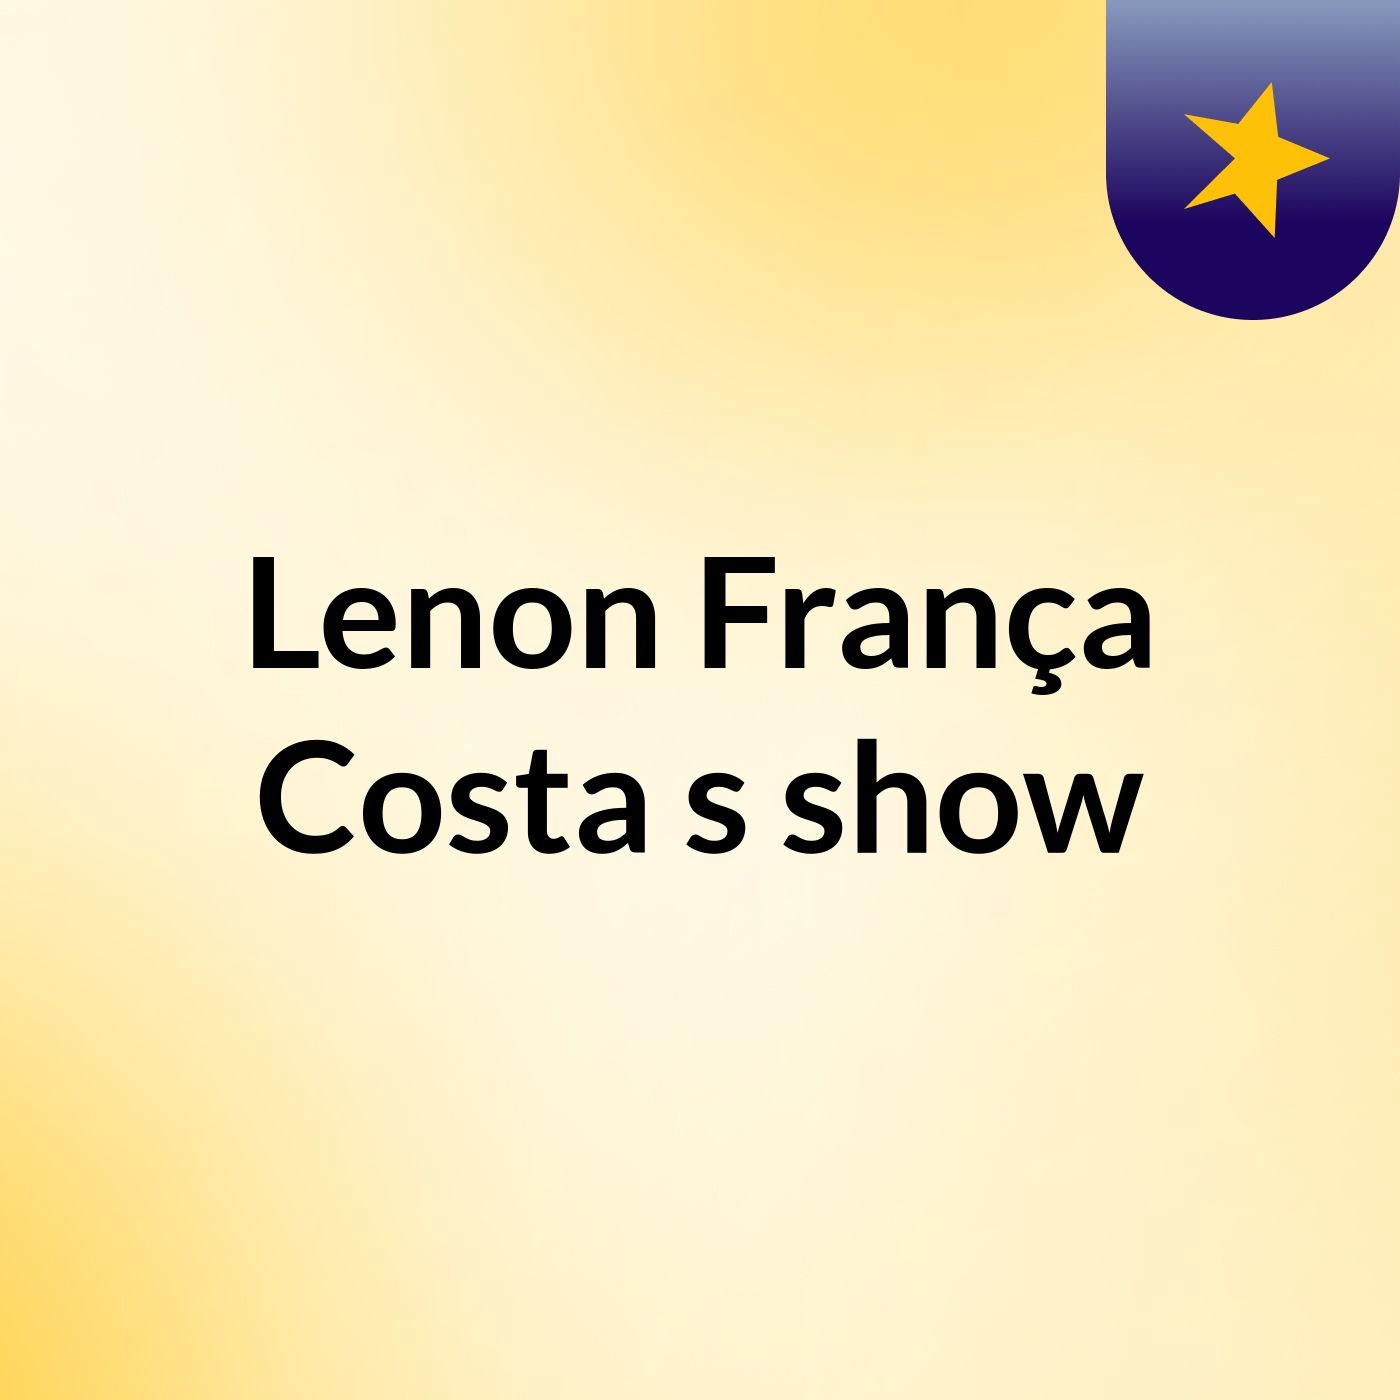 Lenon França Costa's show